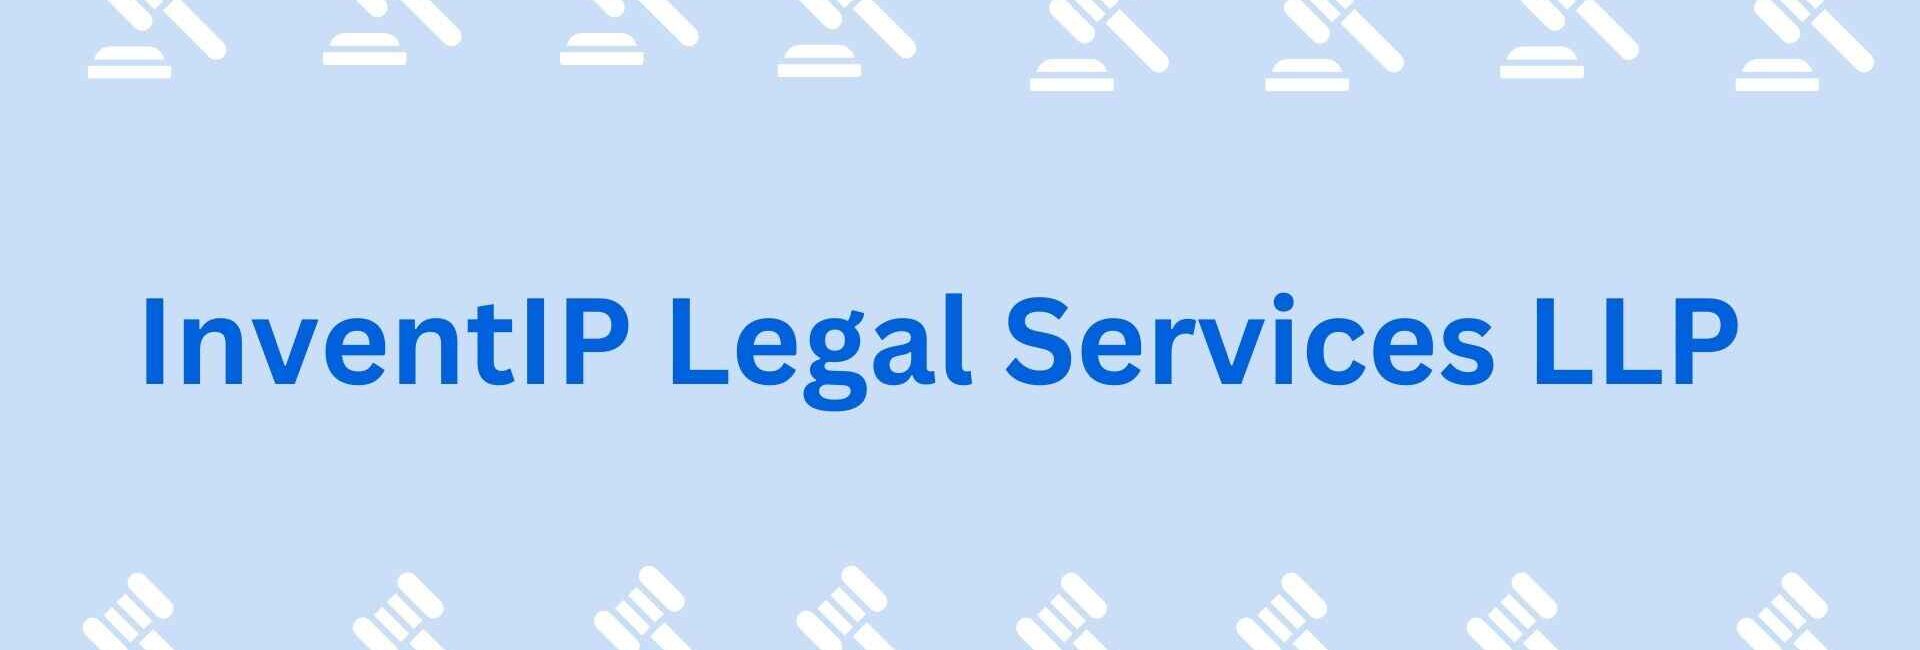 InventIP Legal Services LLP - legal service provider in Noida